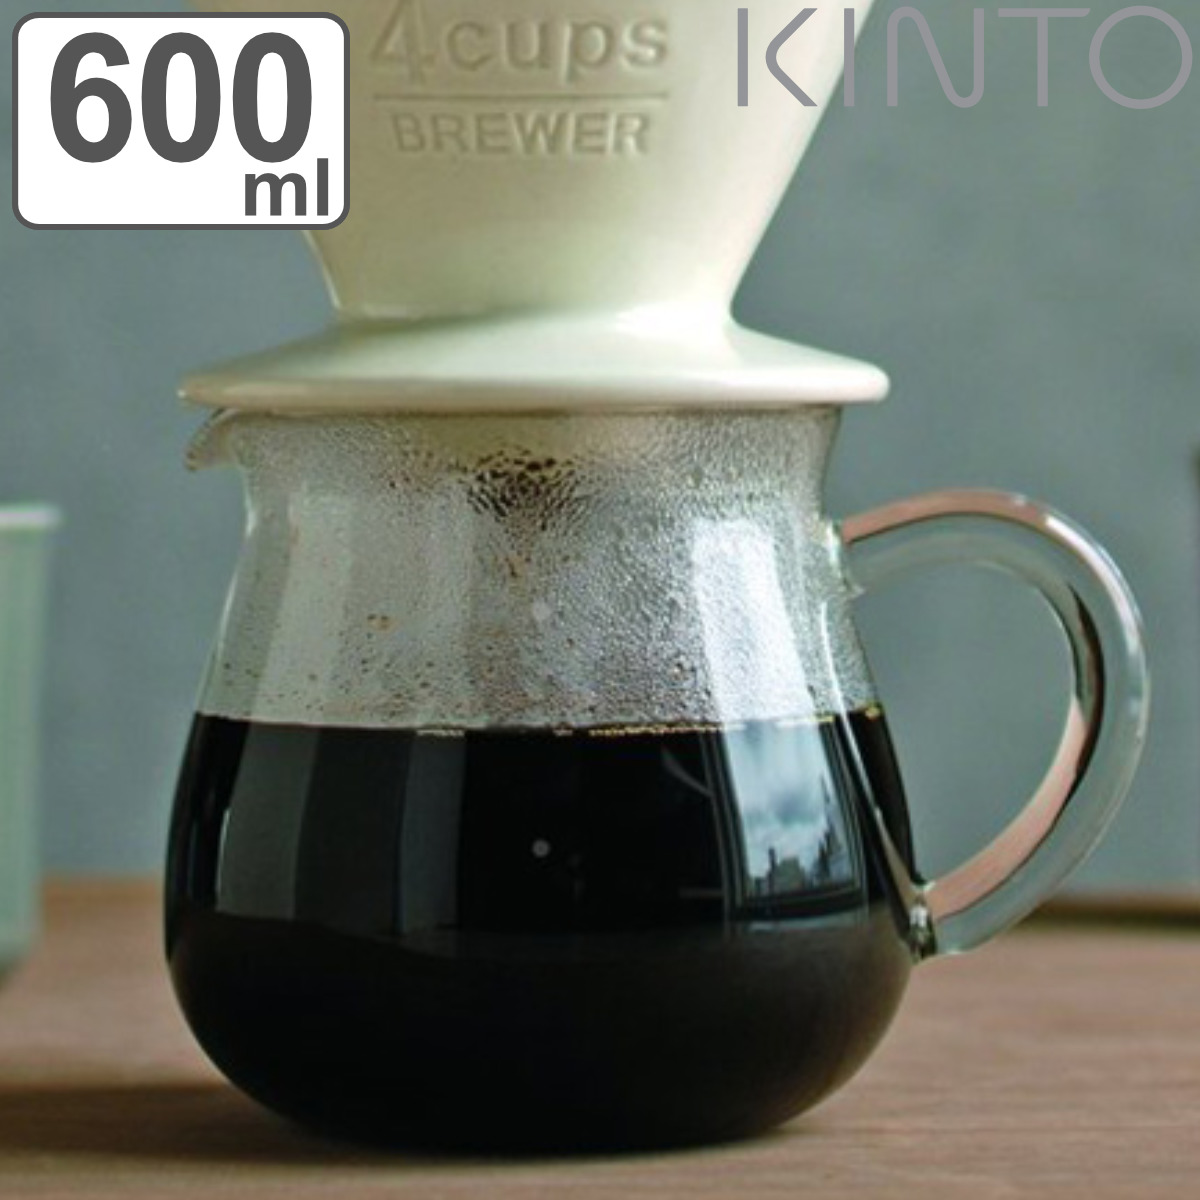 dショッピング |キントー コーヒーサーバー 600ml 4杯用 SLOW